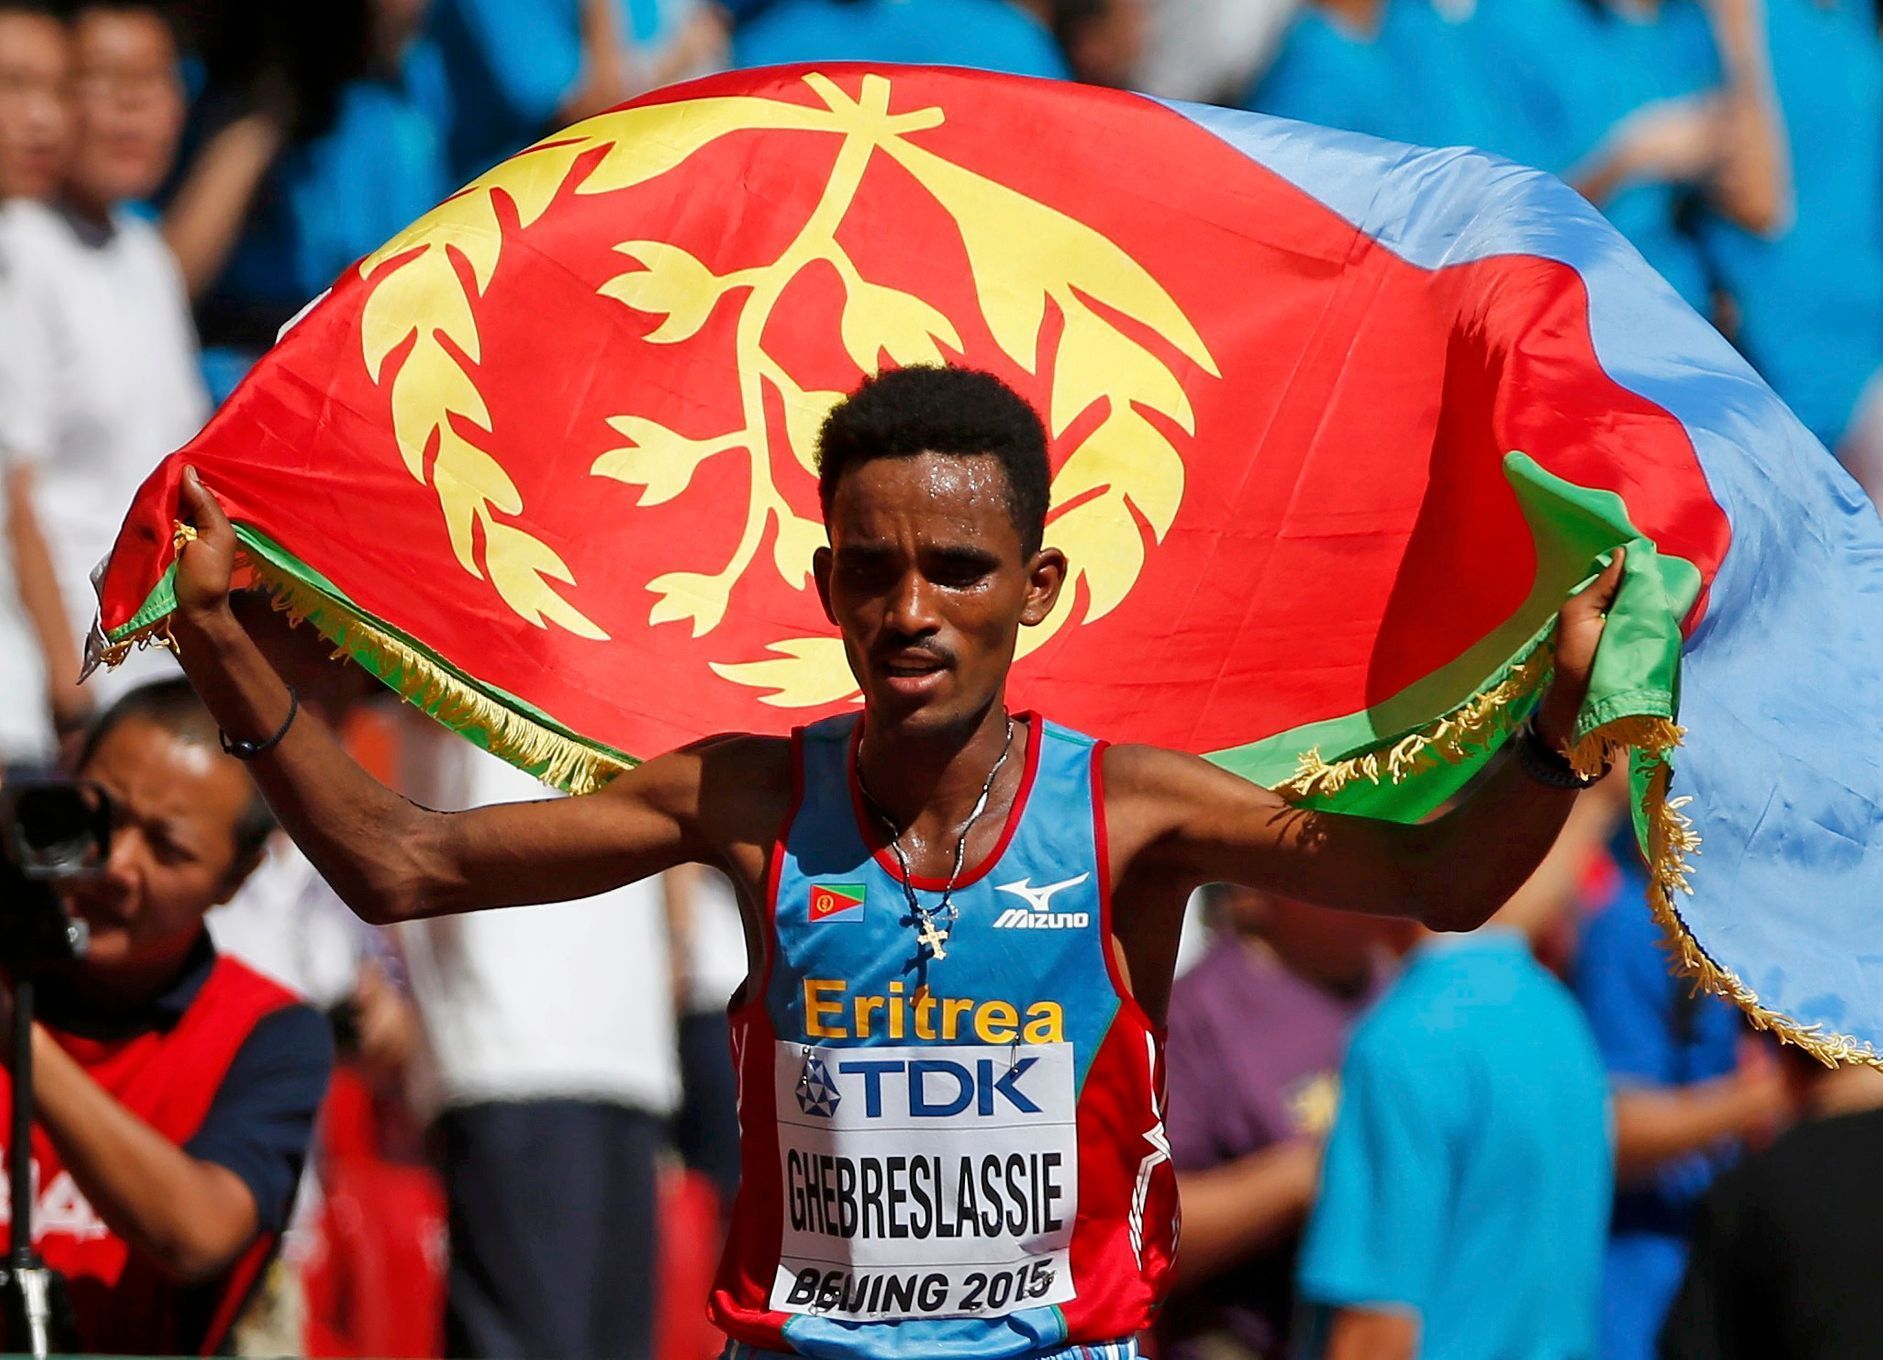 MS v atletice 2015, maraton: Ghirmay Ghebreslassie